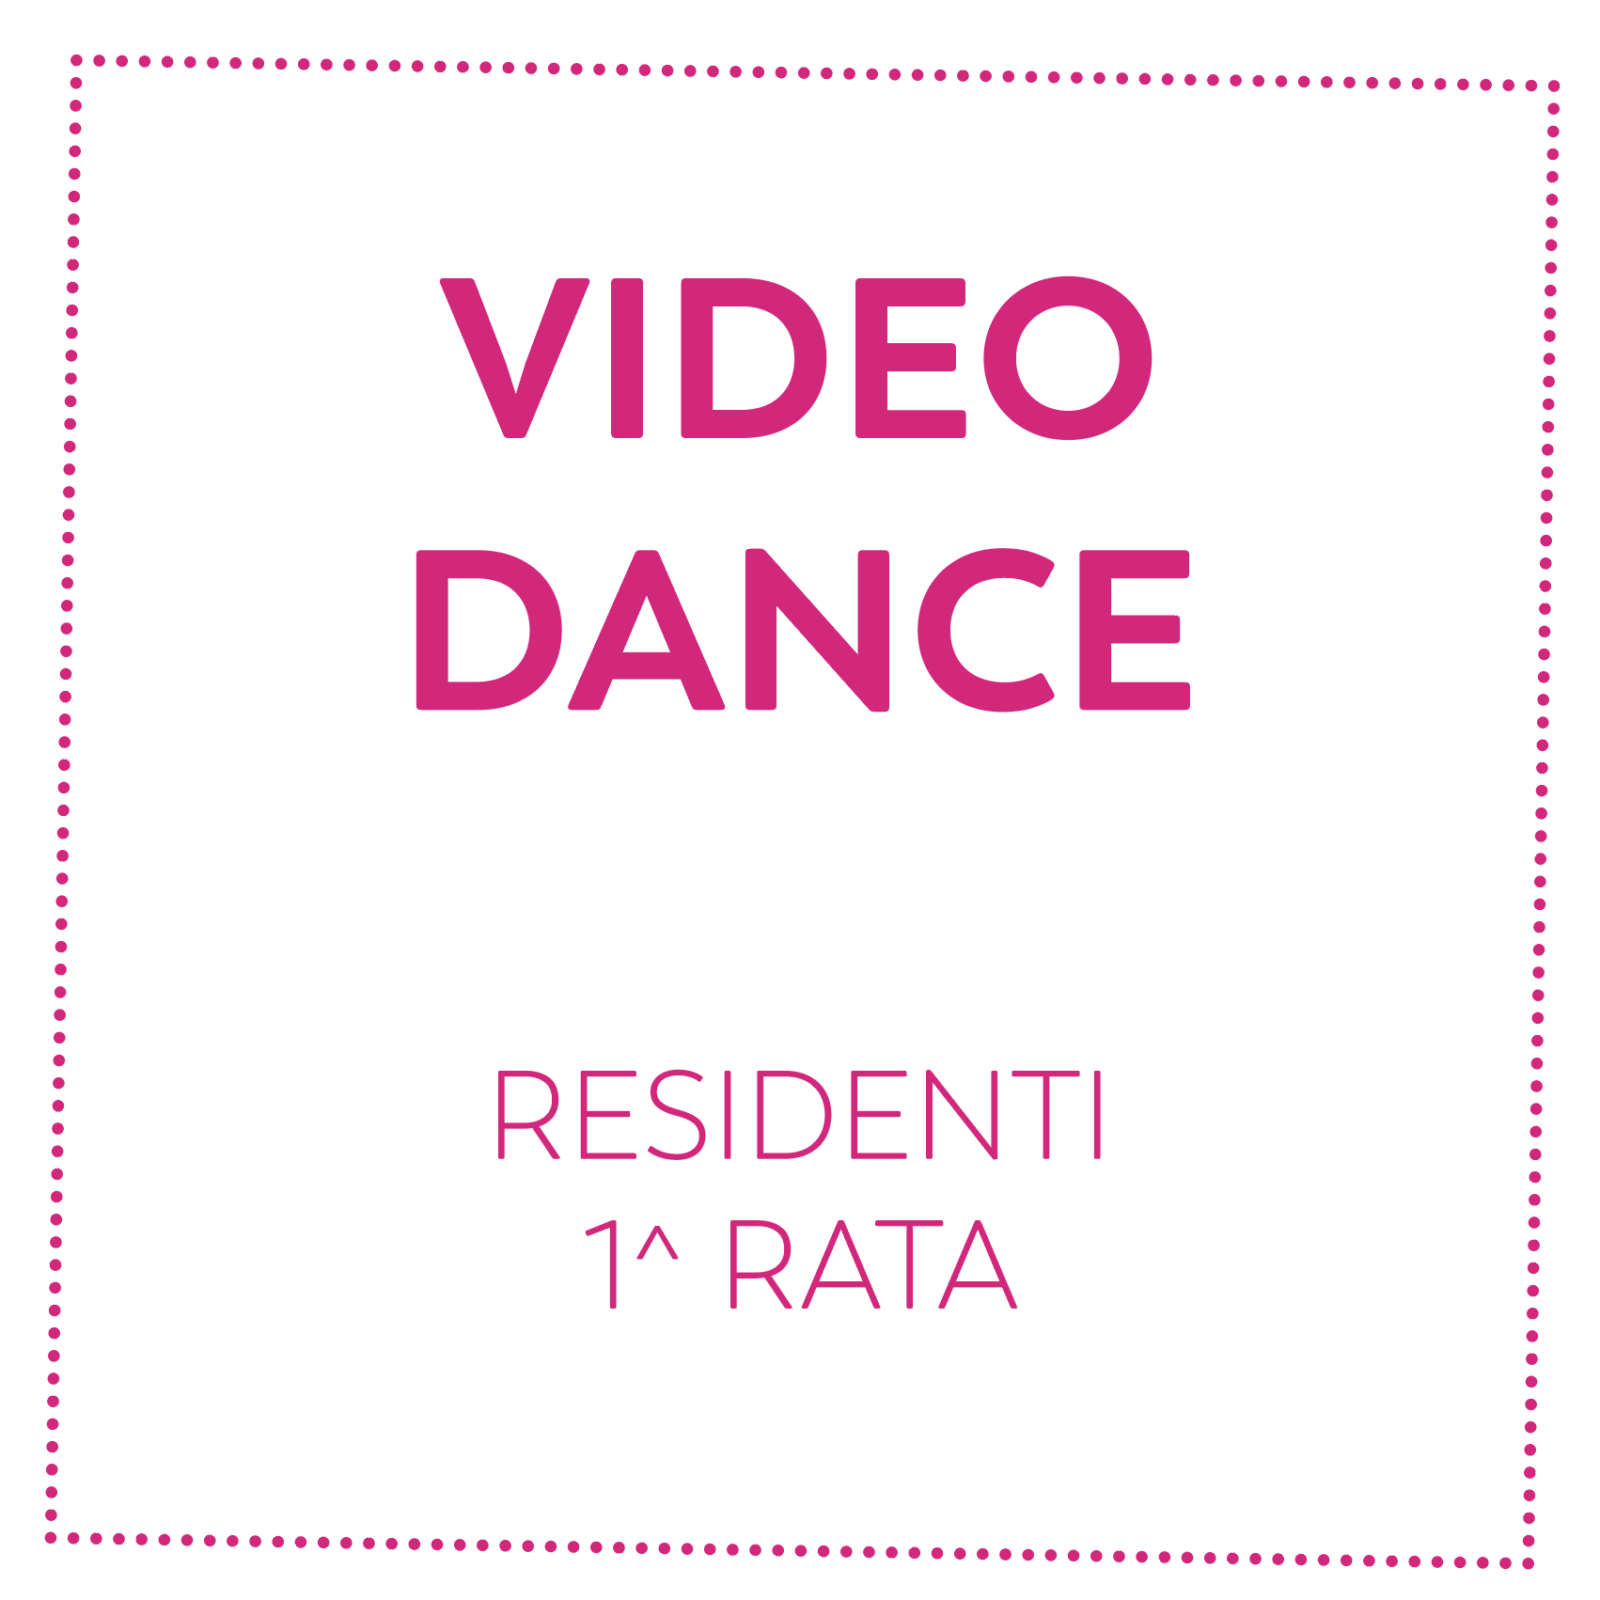 VIDEO DANCE - RESIDENTI - 1^ RATA